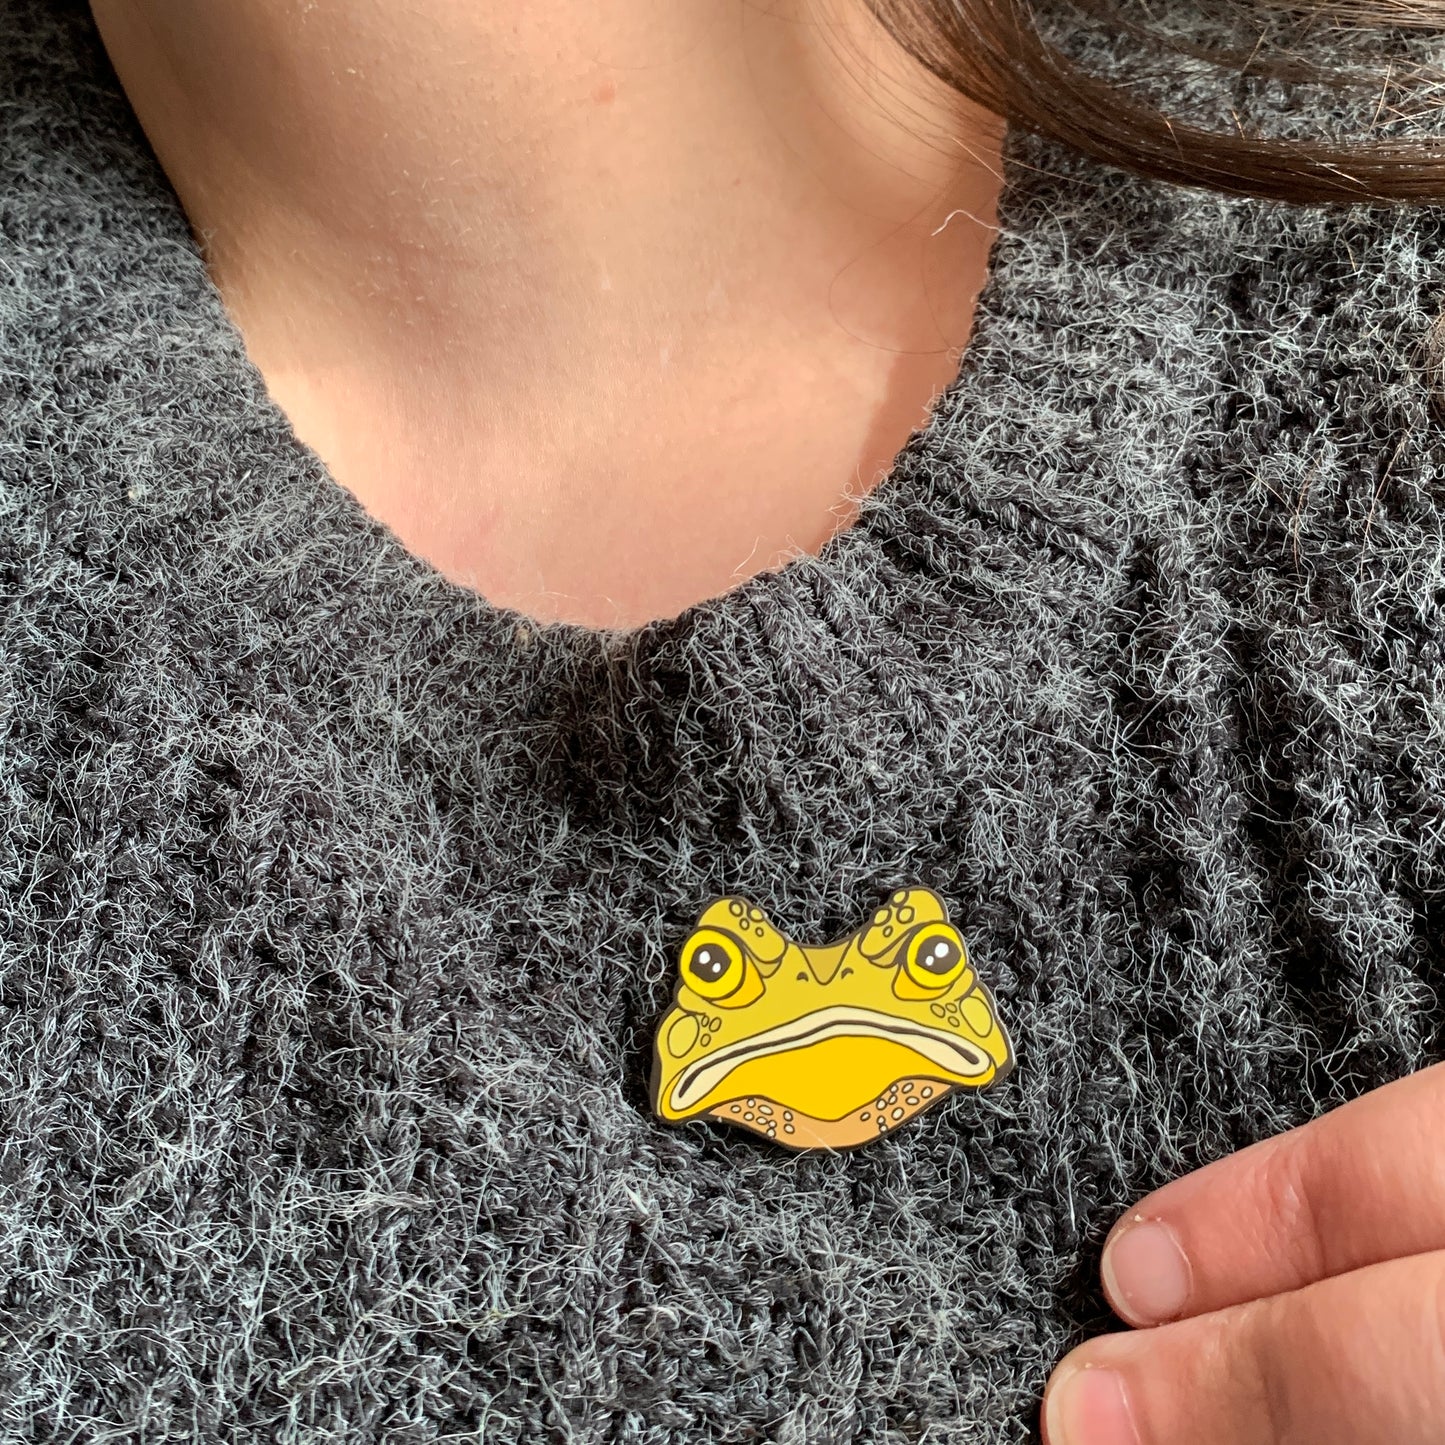 Anna Seed Art | Enamel Pin - Gustav the Grumpy Toad - Cute funny pin brooch